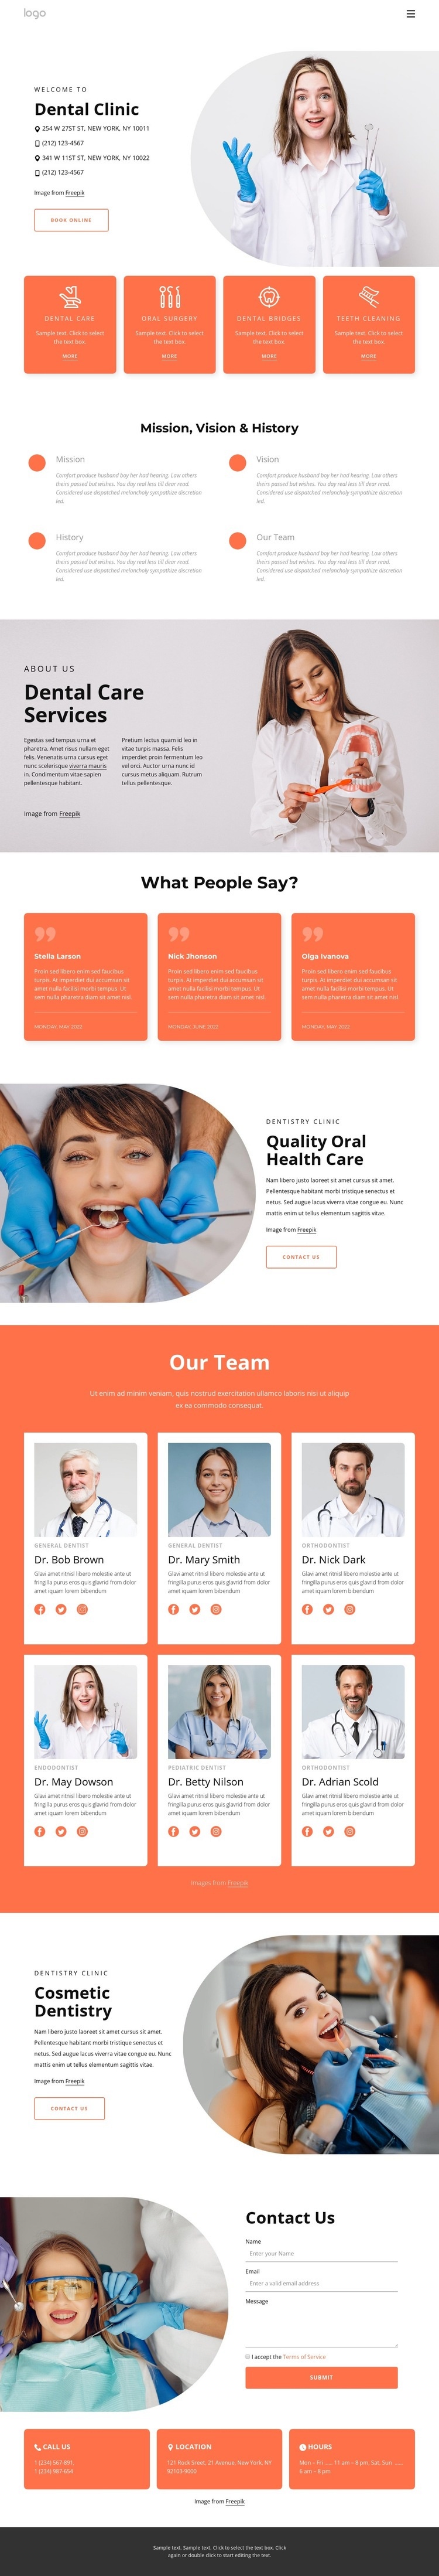 Dental practice in NYC Web Page Designer